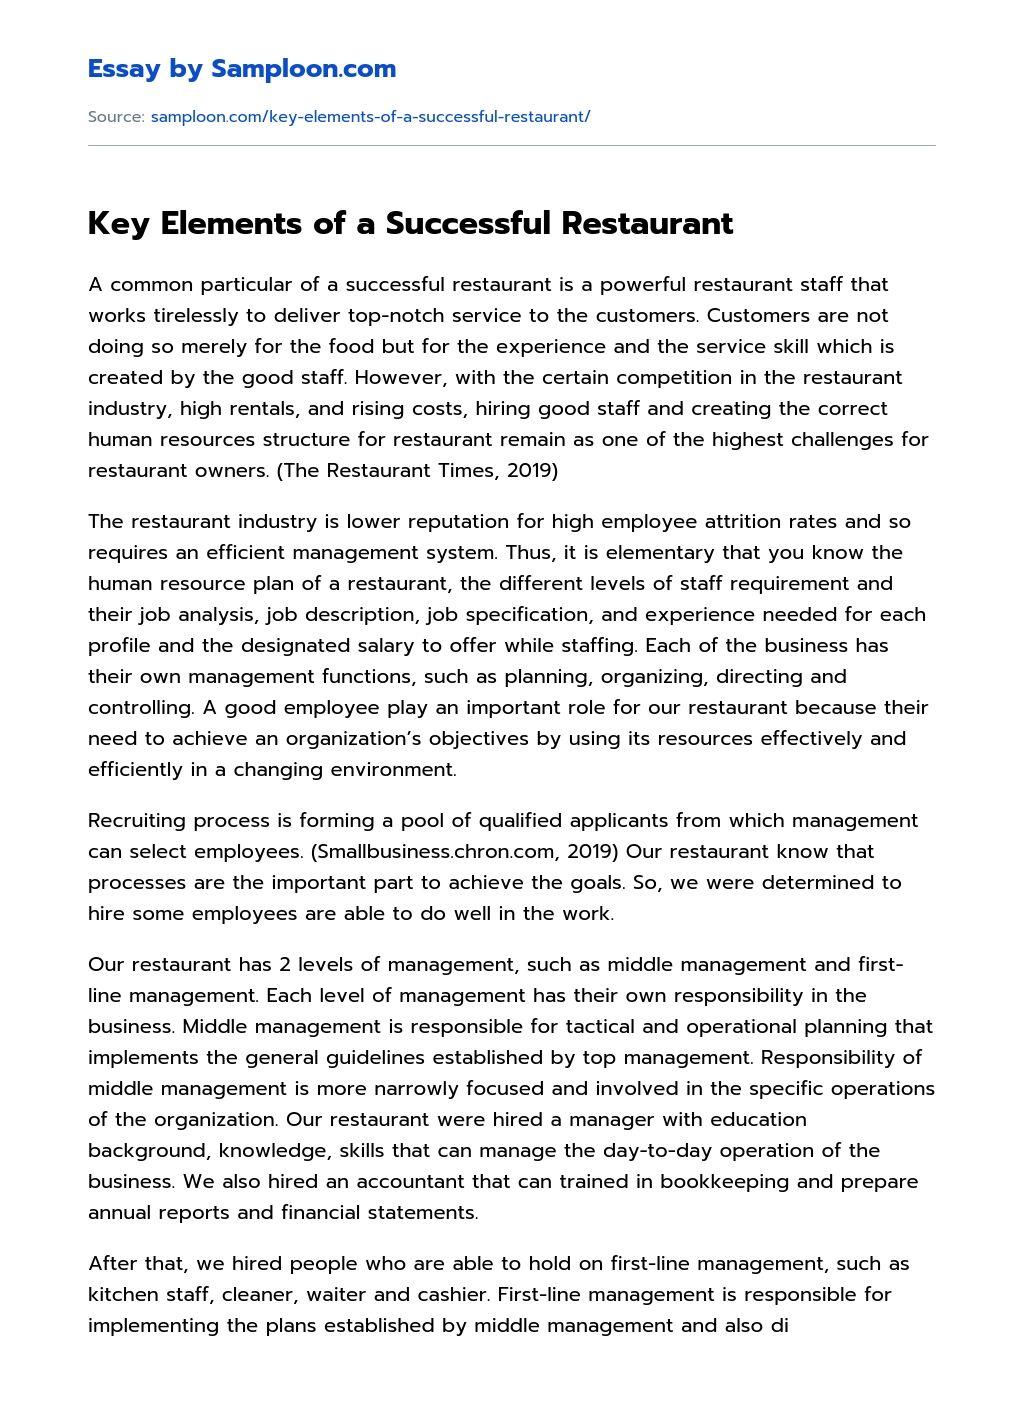 Key Elements of a Successful Restaurant essay